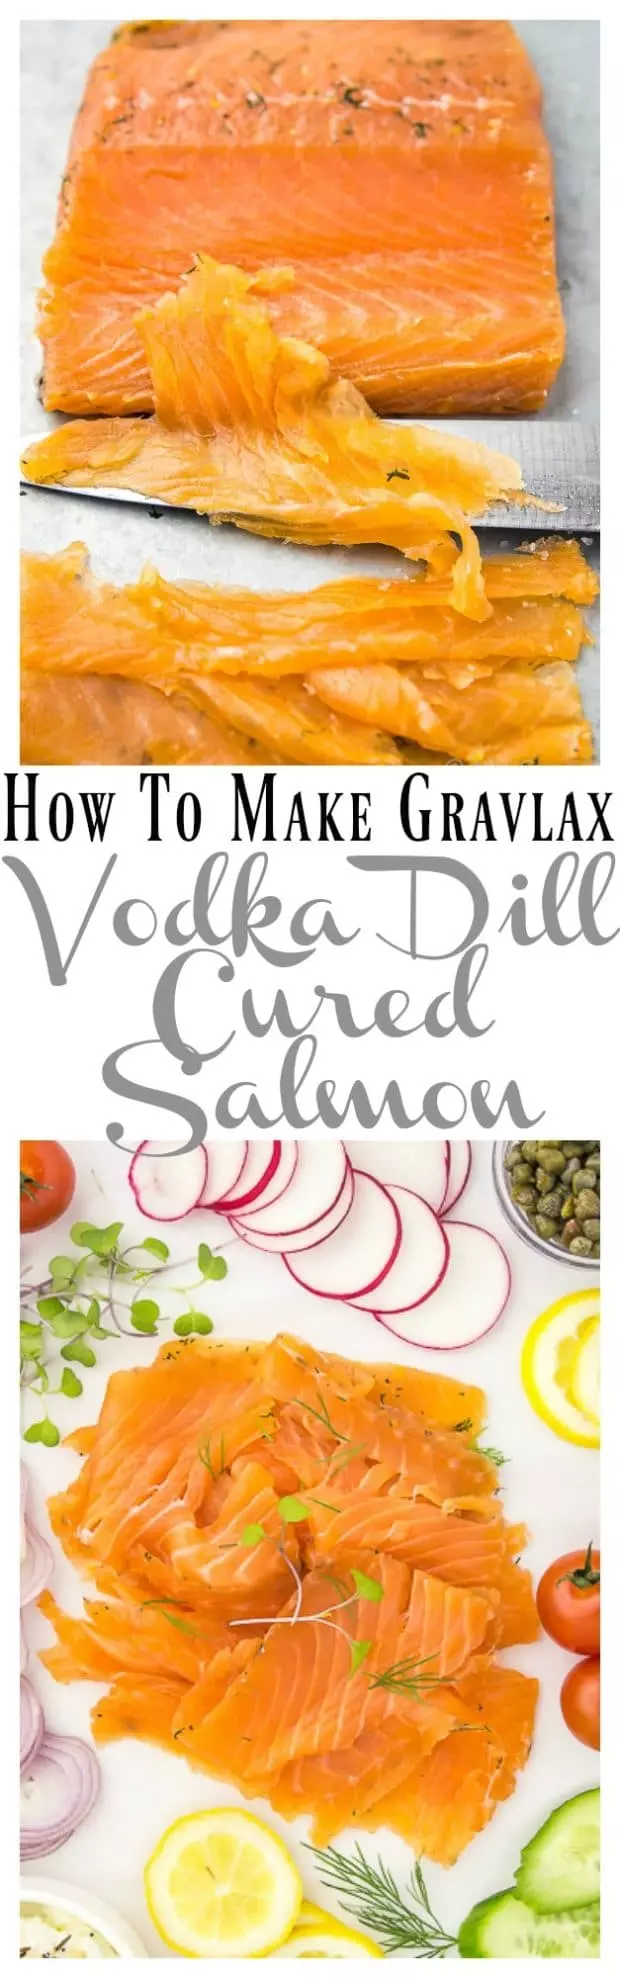 How To Make Gravlax - Vodka Dill Cured Salmon